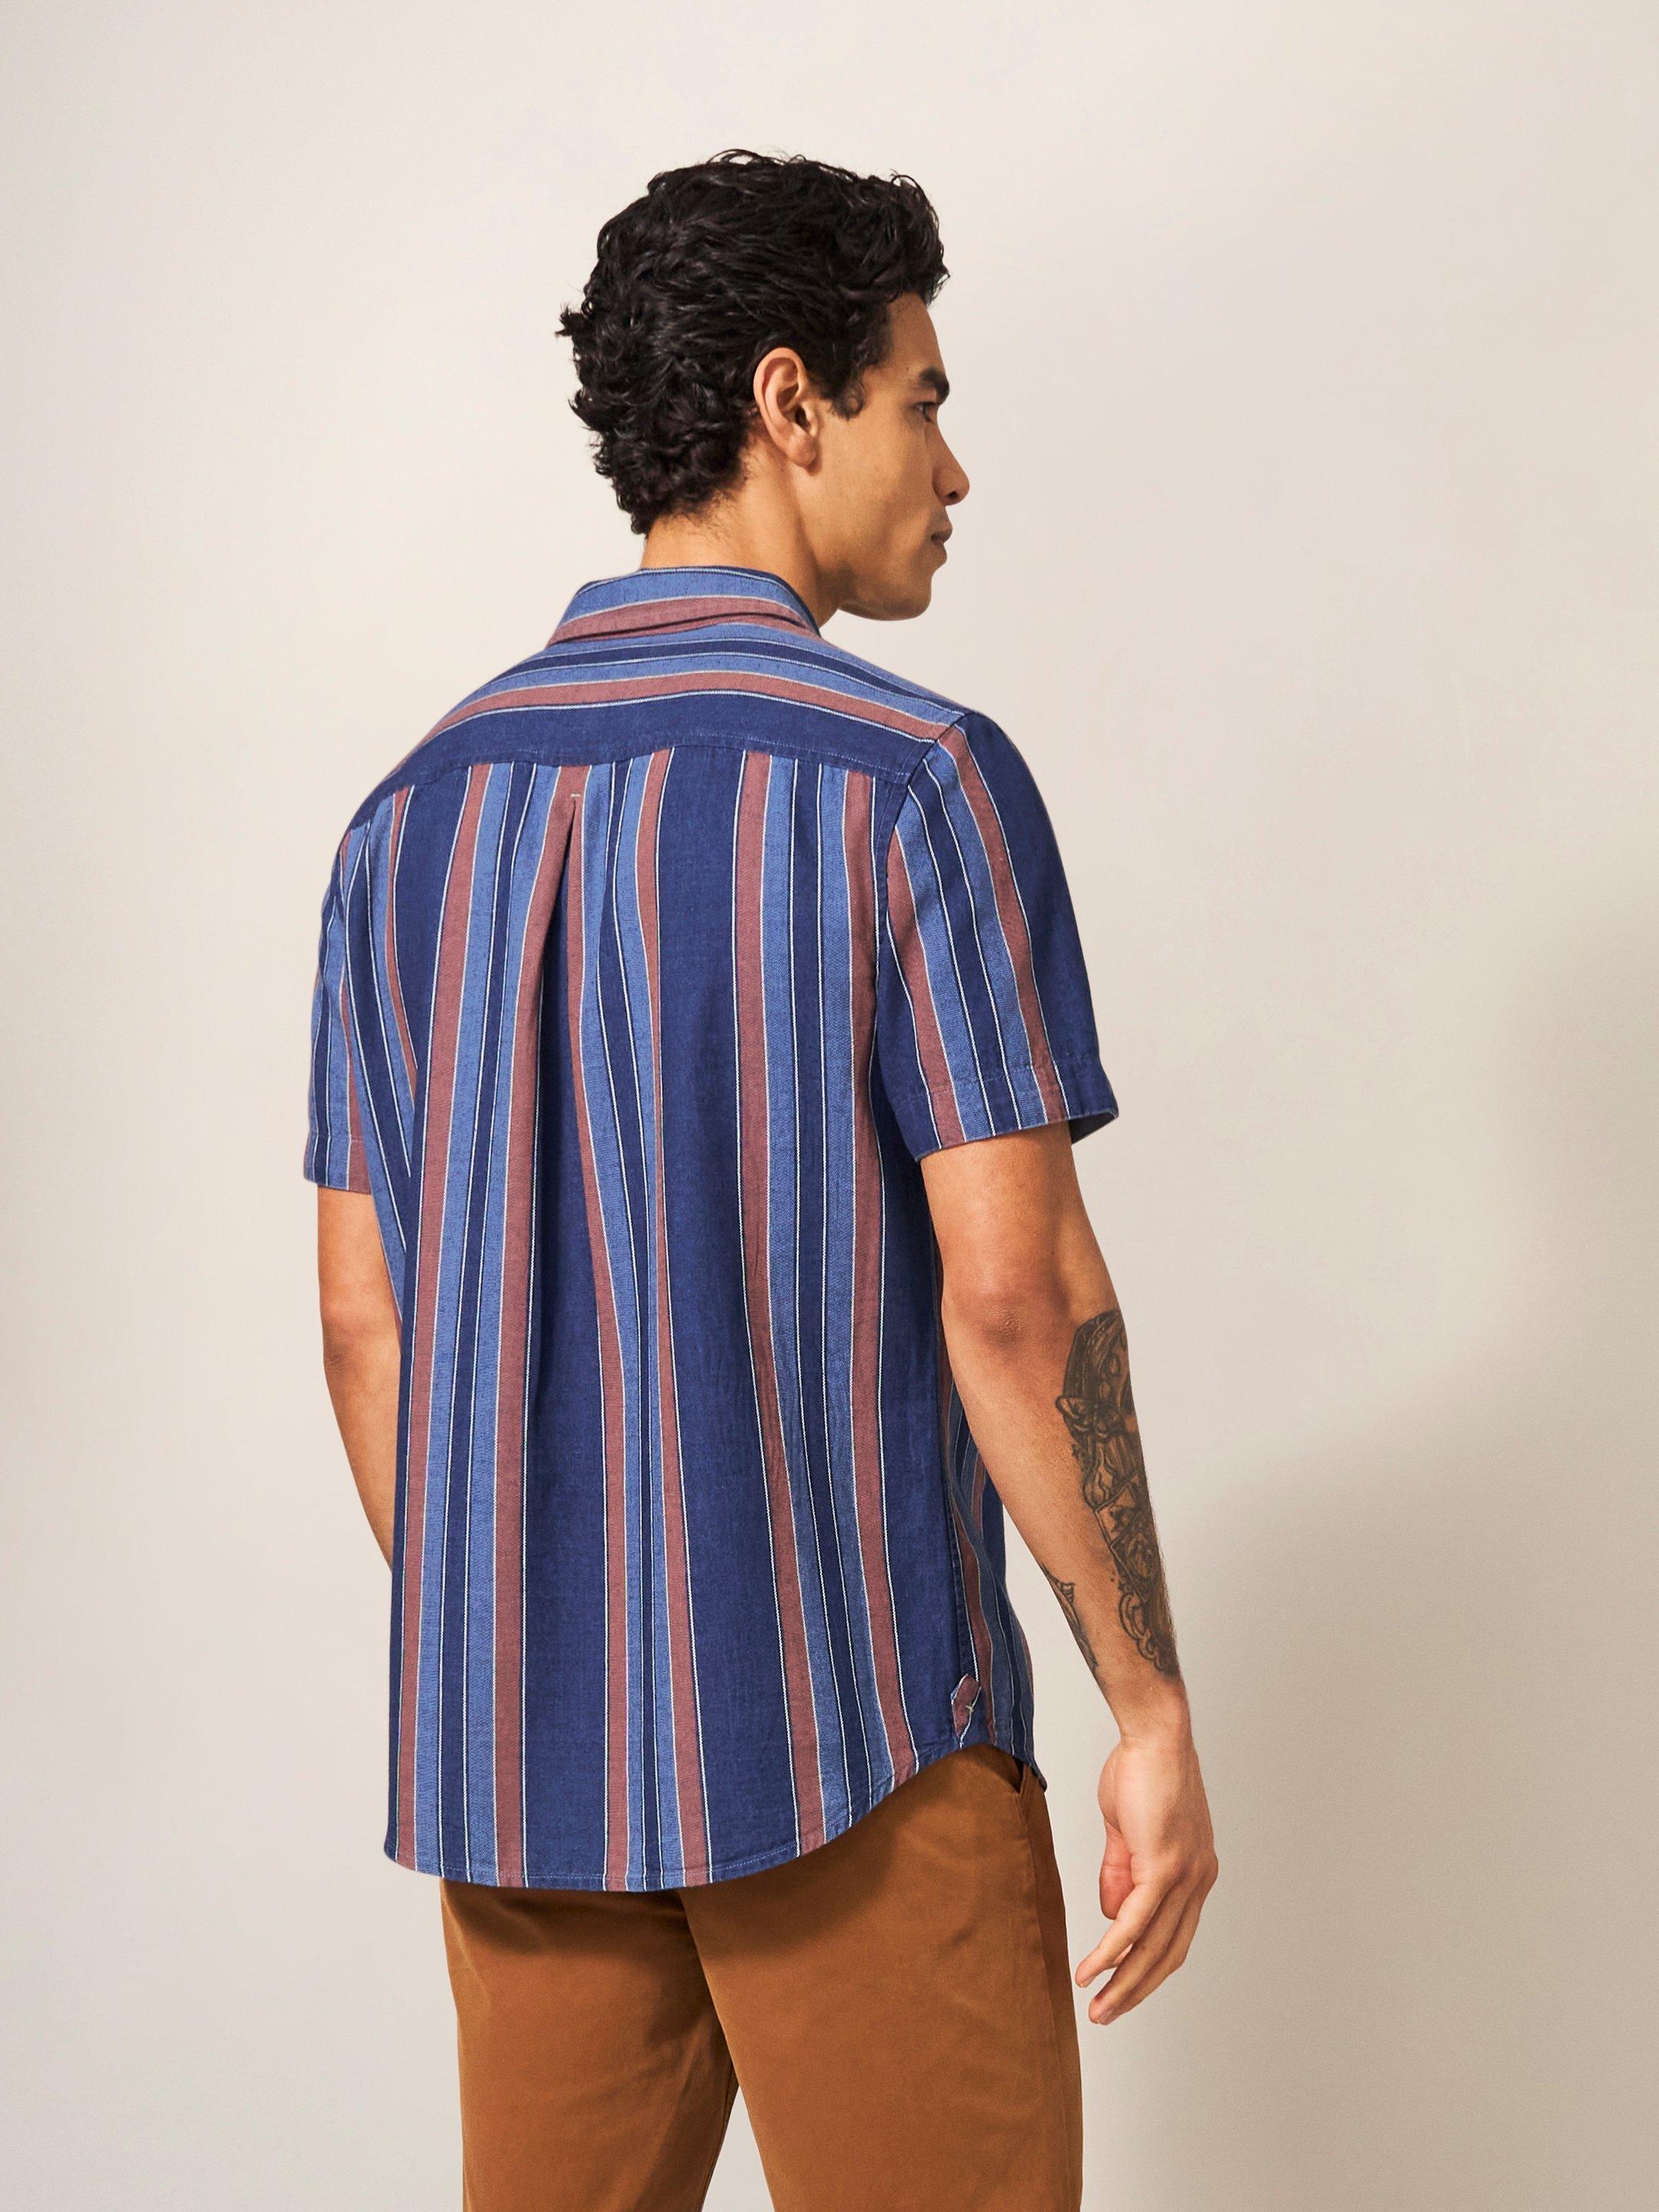 Indigo Striped Shirt in INDIGO BLE - MODEL BACK